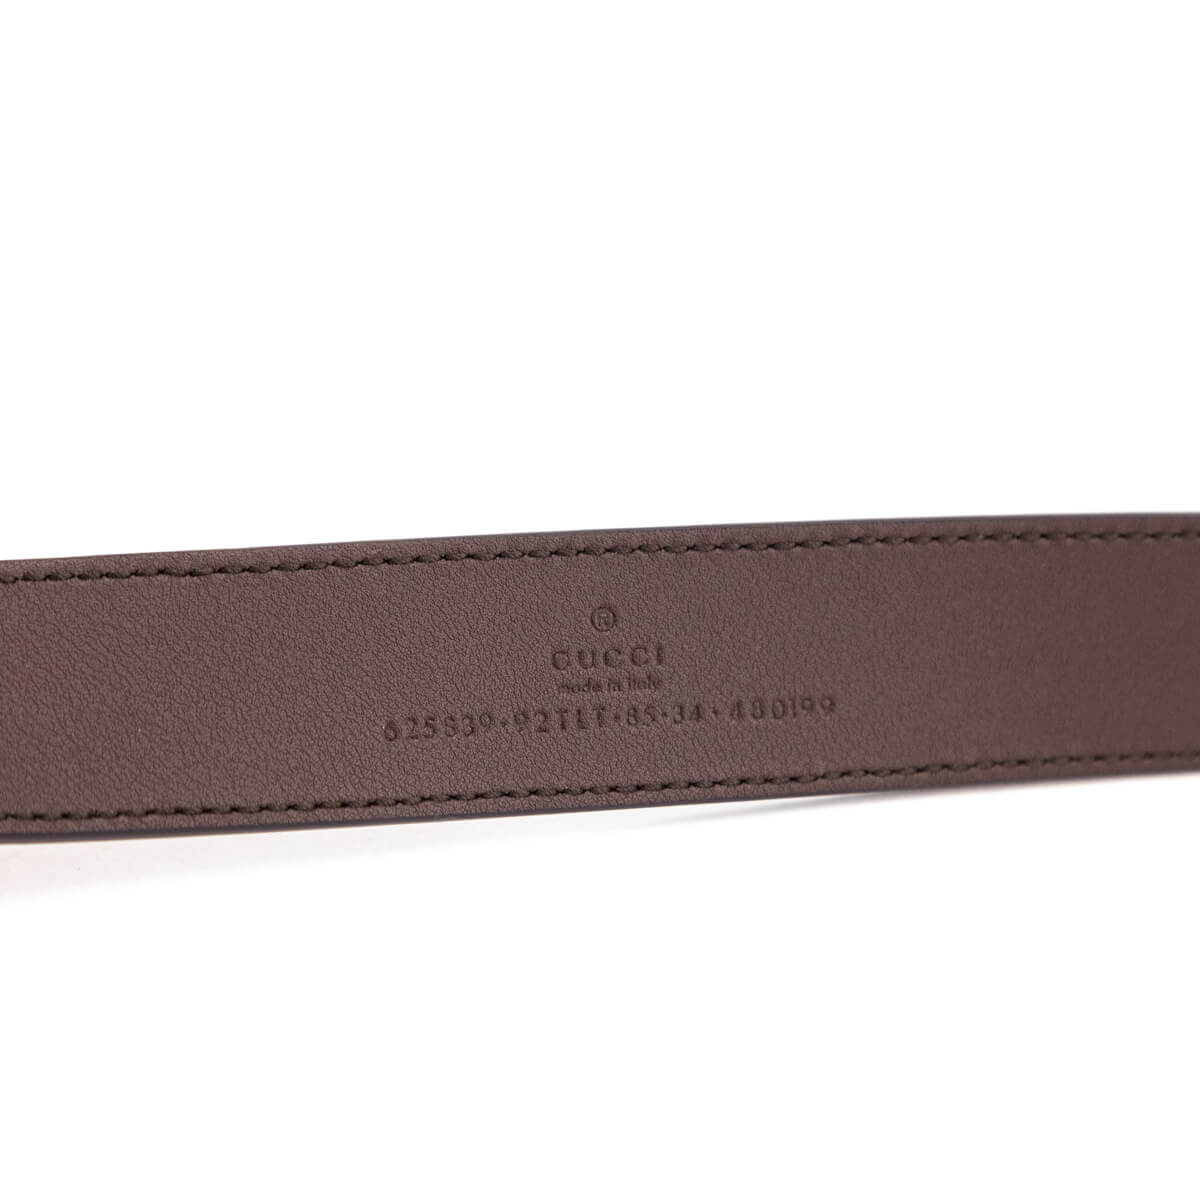 Gucci Beige & Ebony Canvas GG Supreme Monogram Marmont Belt Size S - Love that Bag etc - Preowned Authentic Designer Handbags & Preloved Fashions